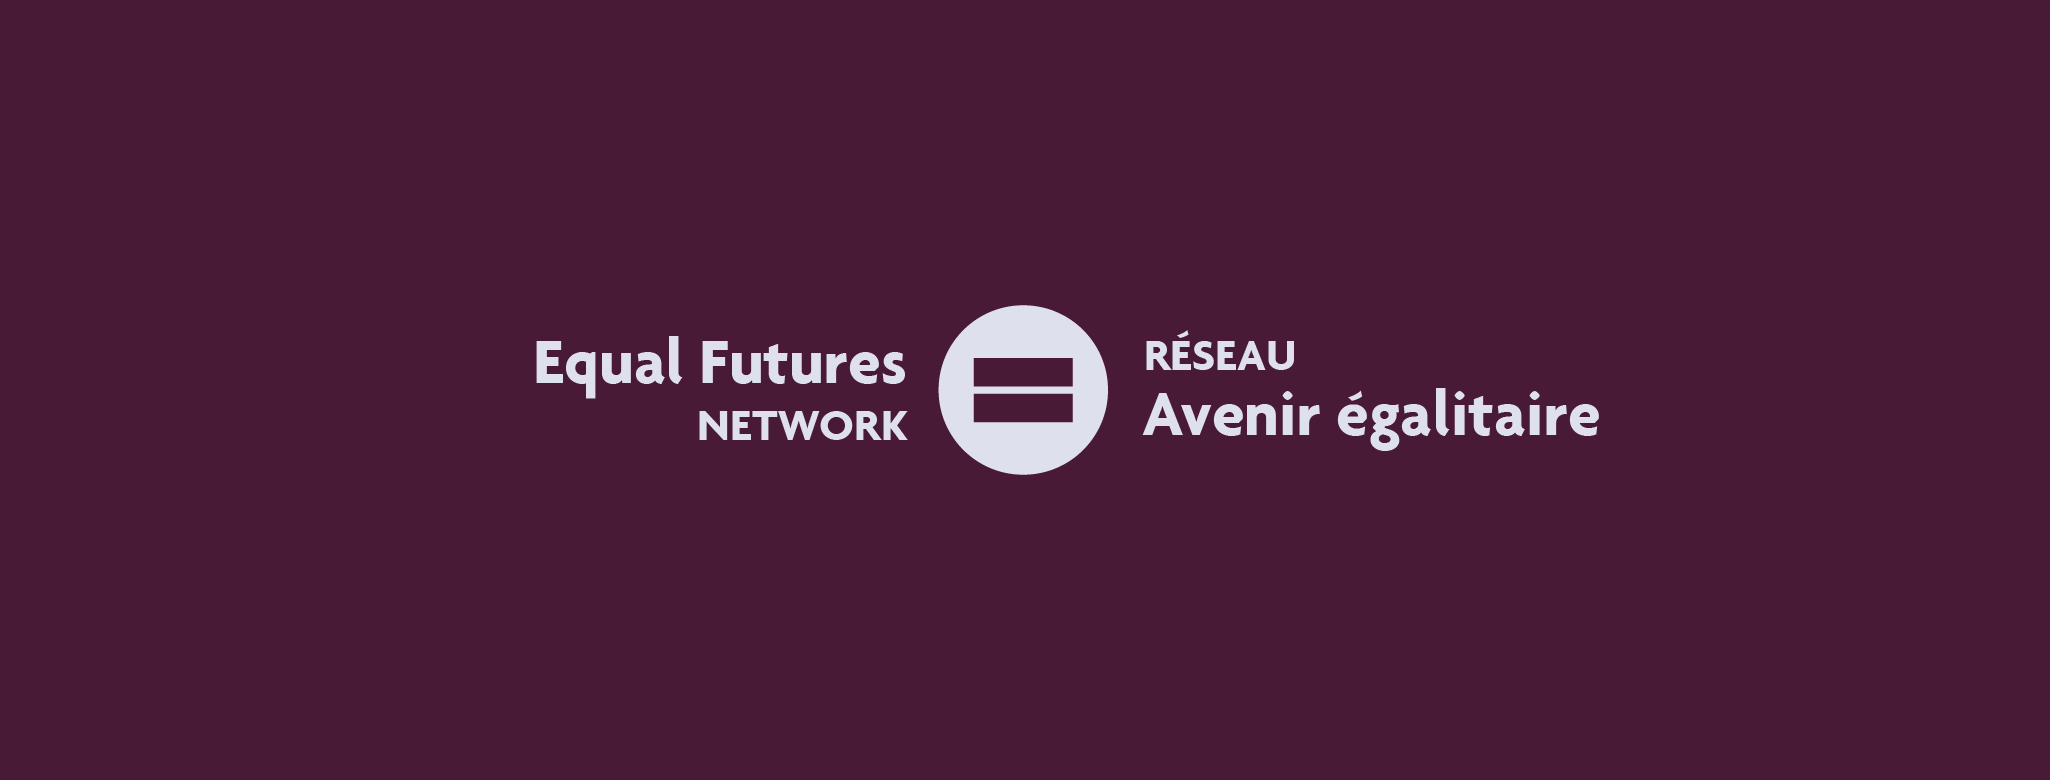 equal futures network logo